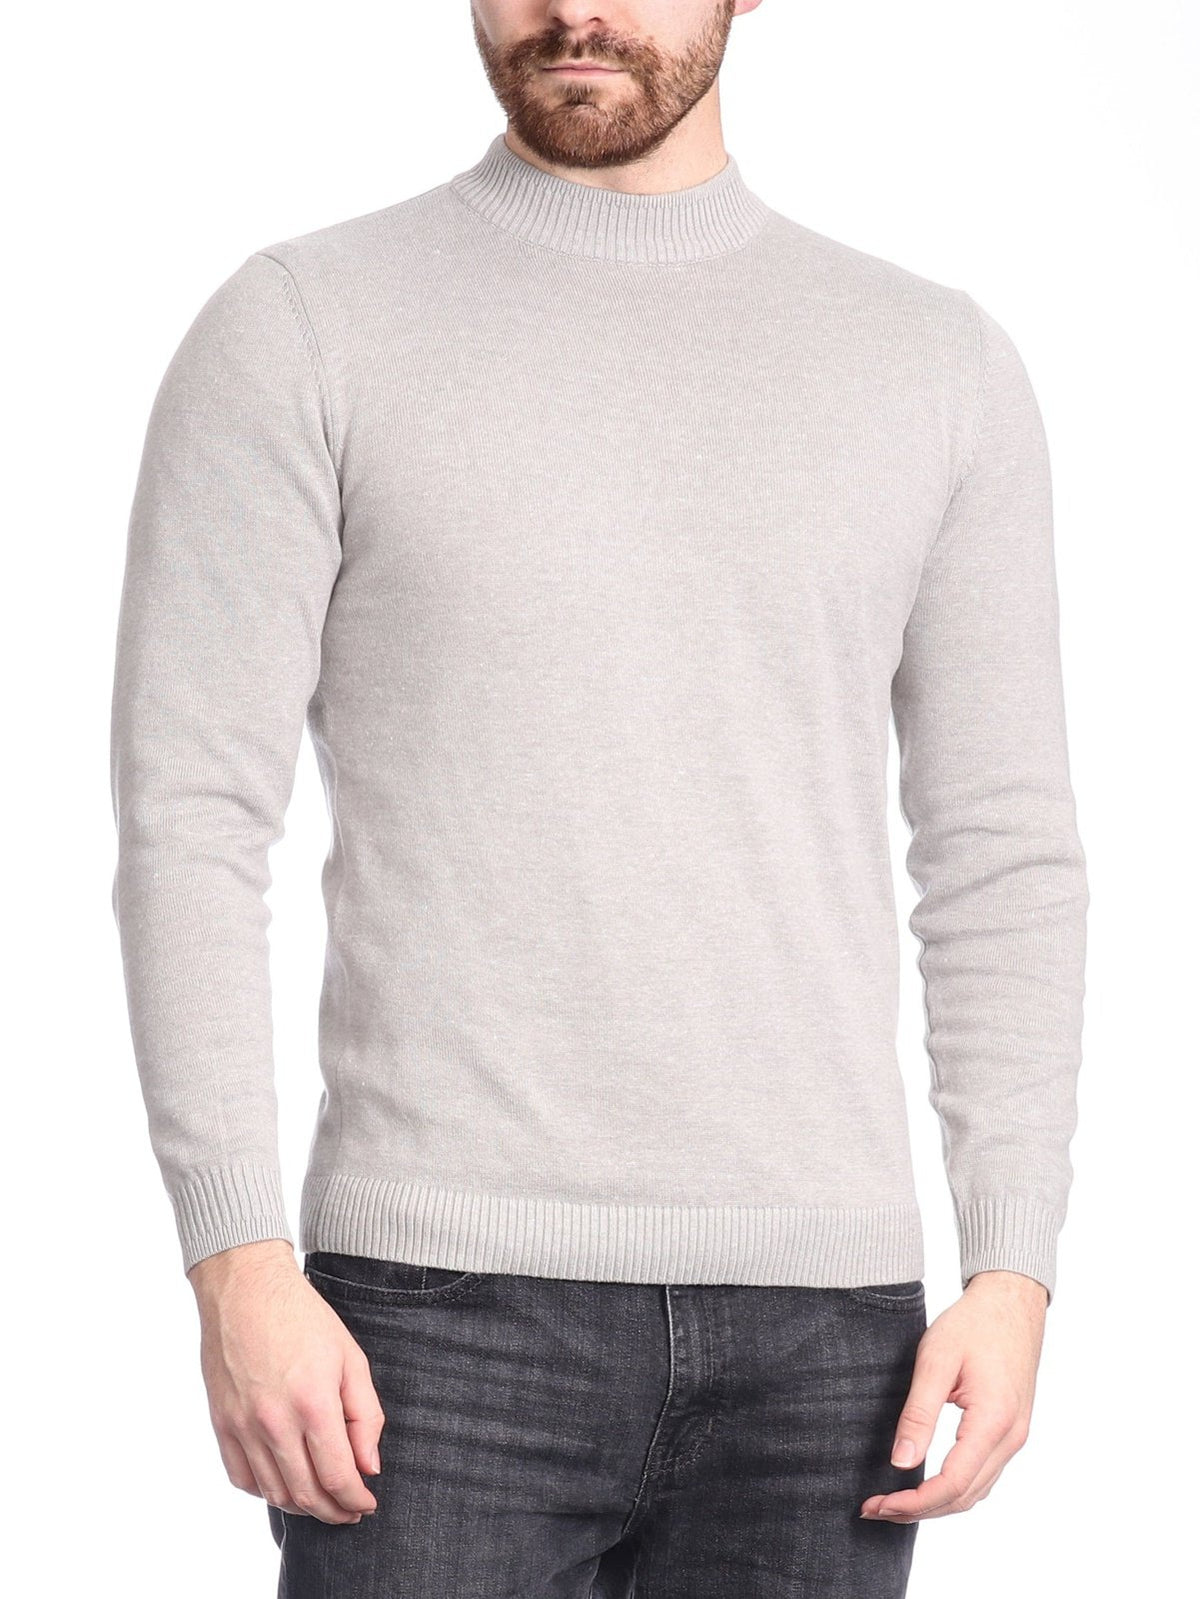 Arthur Black Arthur Black Solid Light Gray Pullover Cotton Blend Mock Neck Sweater Shirt